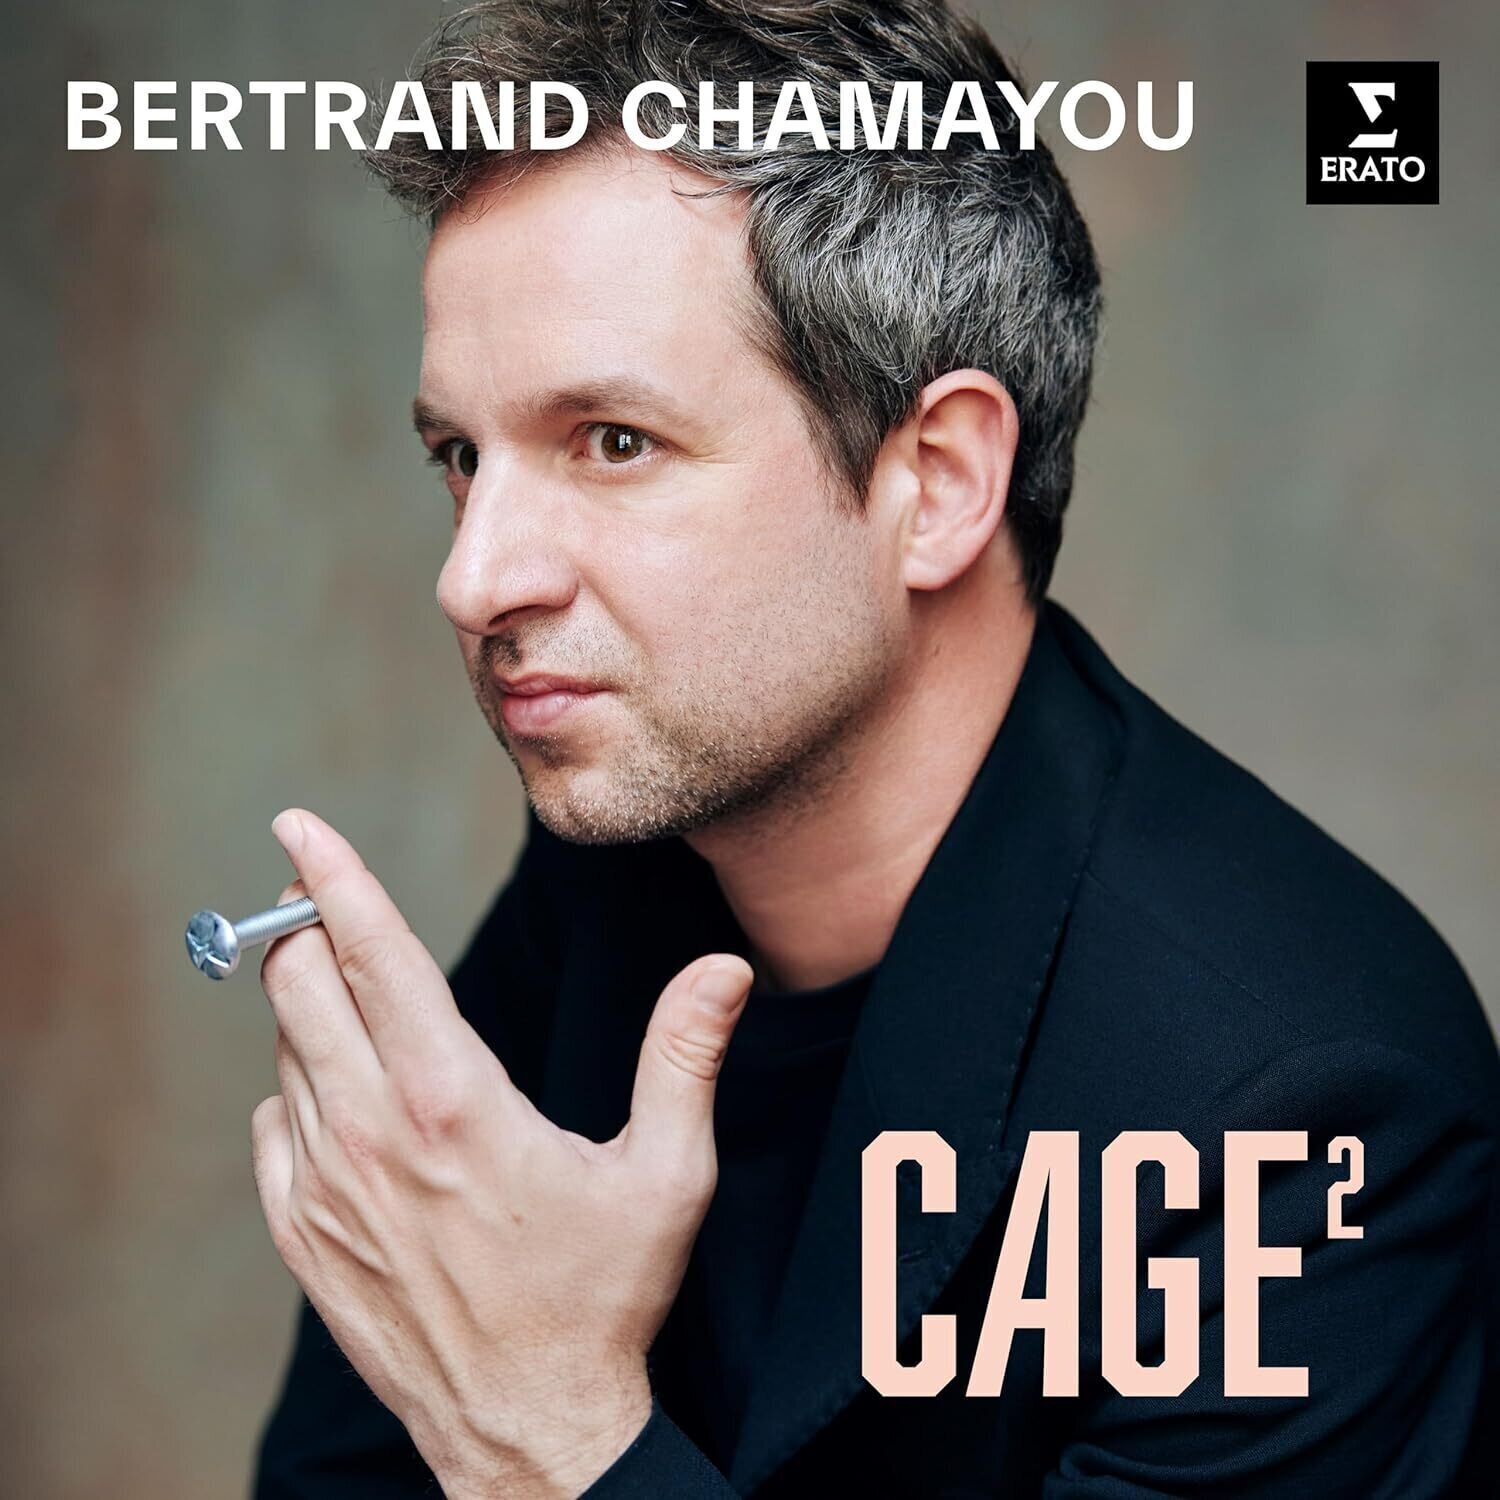 CD muzica Bertrand Chamayou - Cage2 (CD)